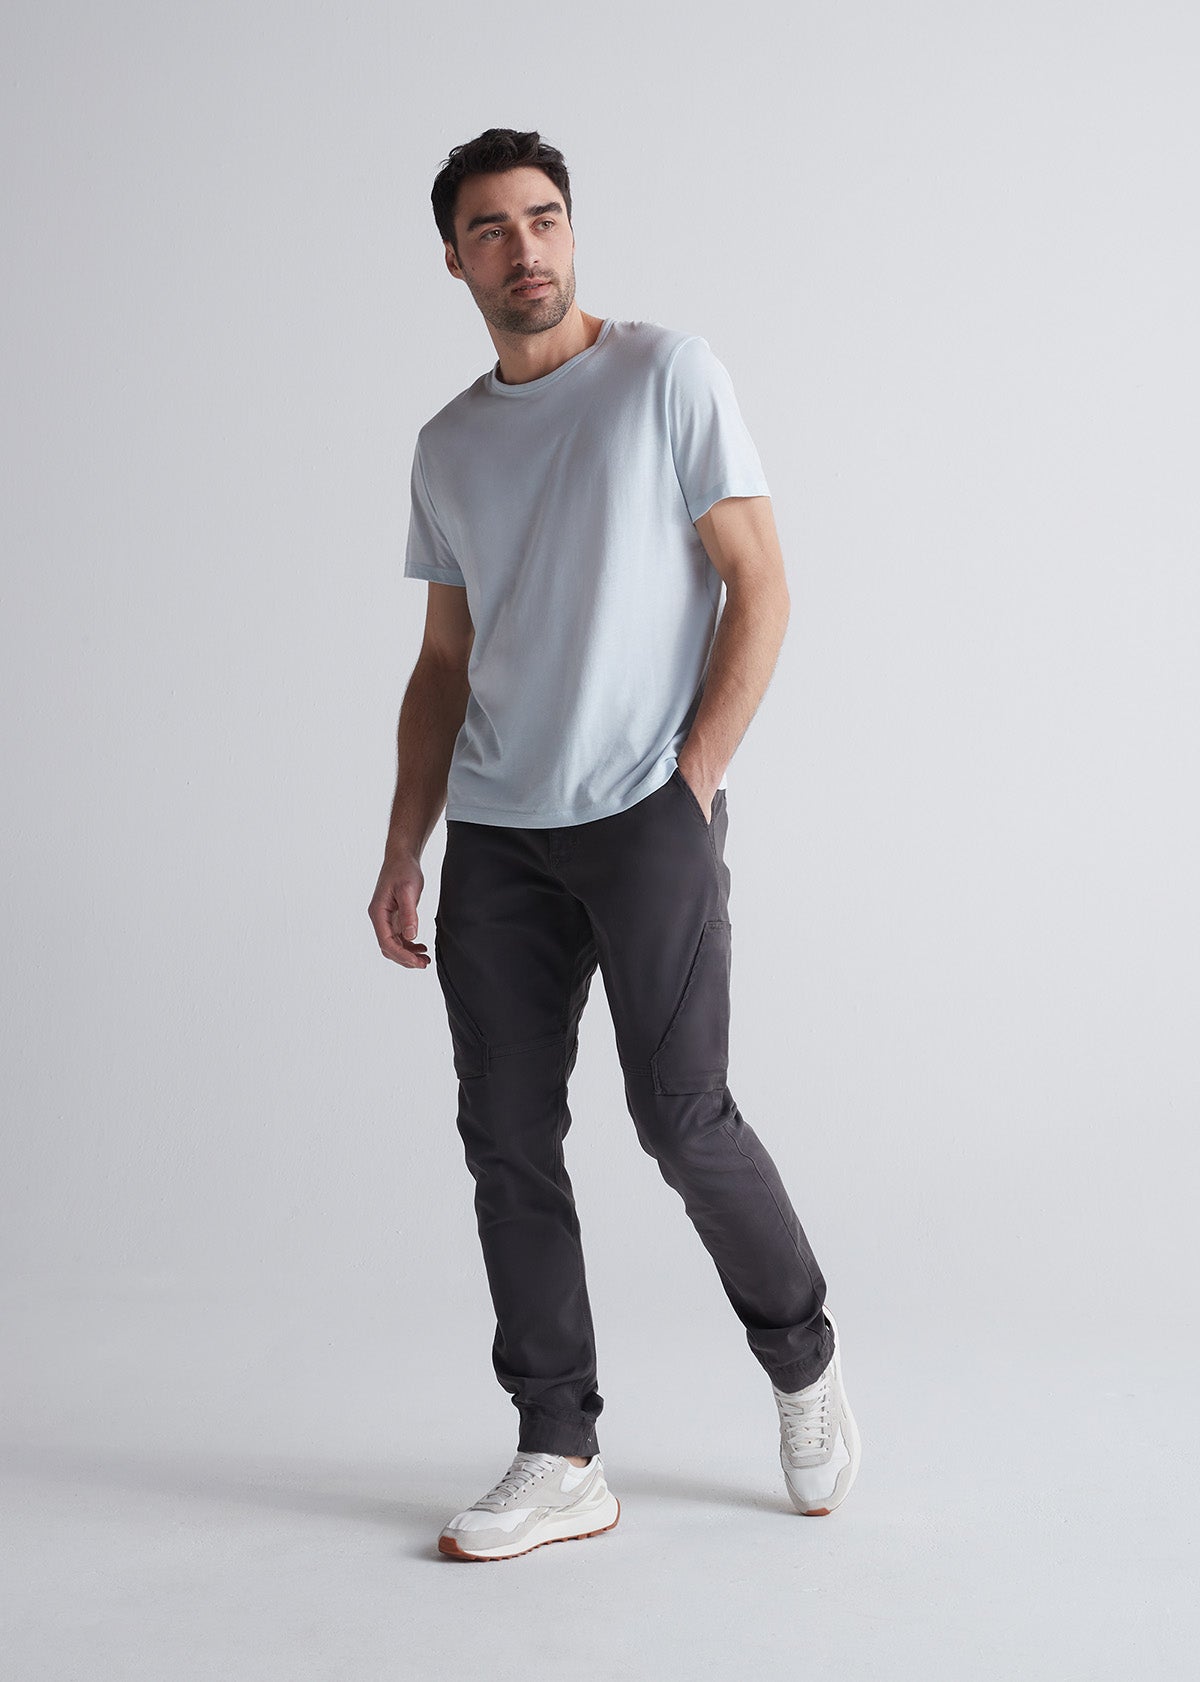 Skinny Fit Suit trousers - Light grey marl - Men | H&M IN